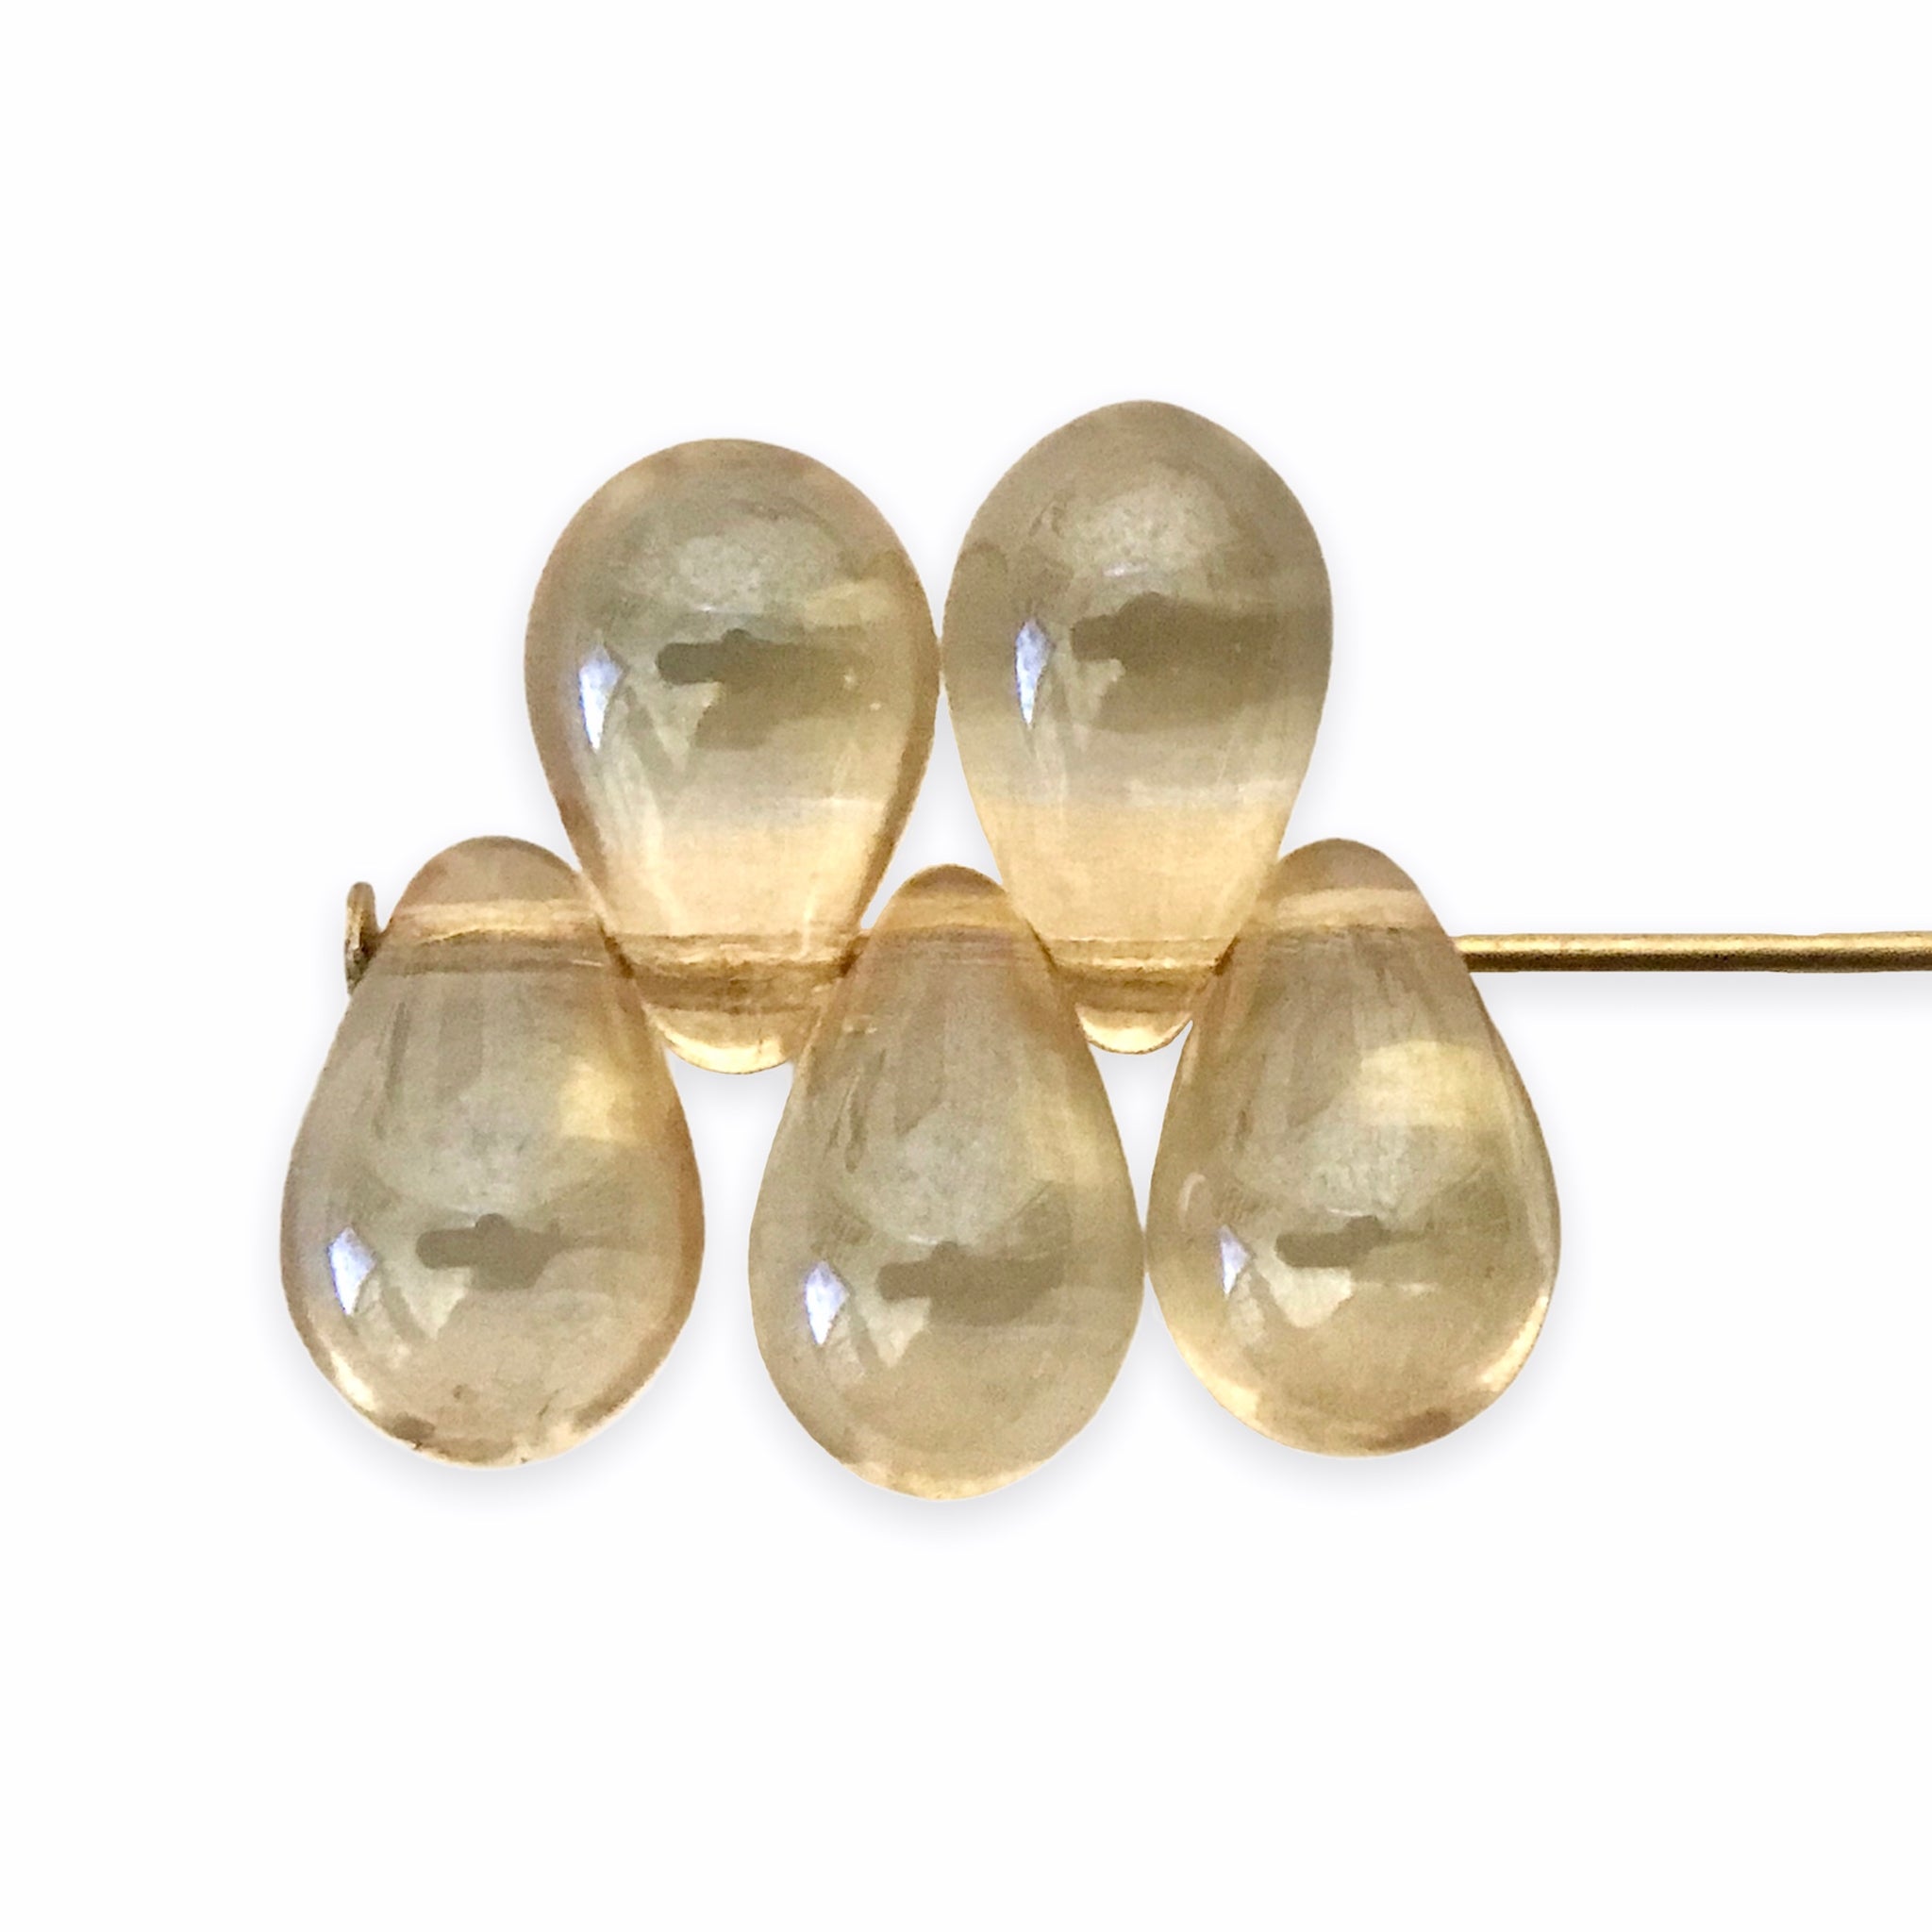 Czech glass teardrop beads 50pc champagne luster 9x6mm – Orange Grove Beads